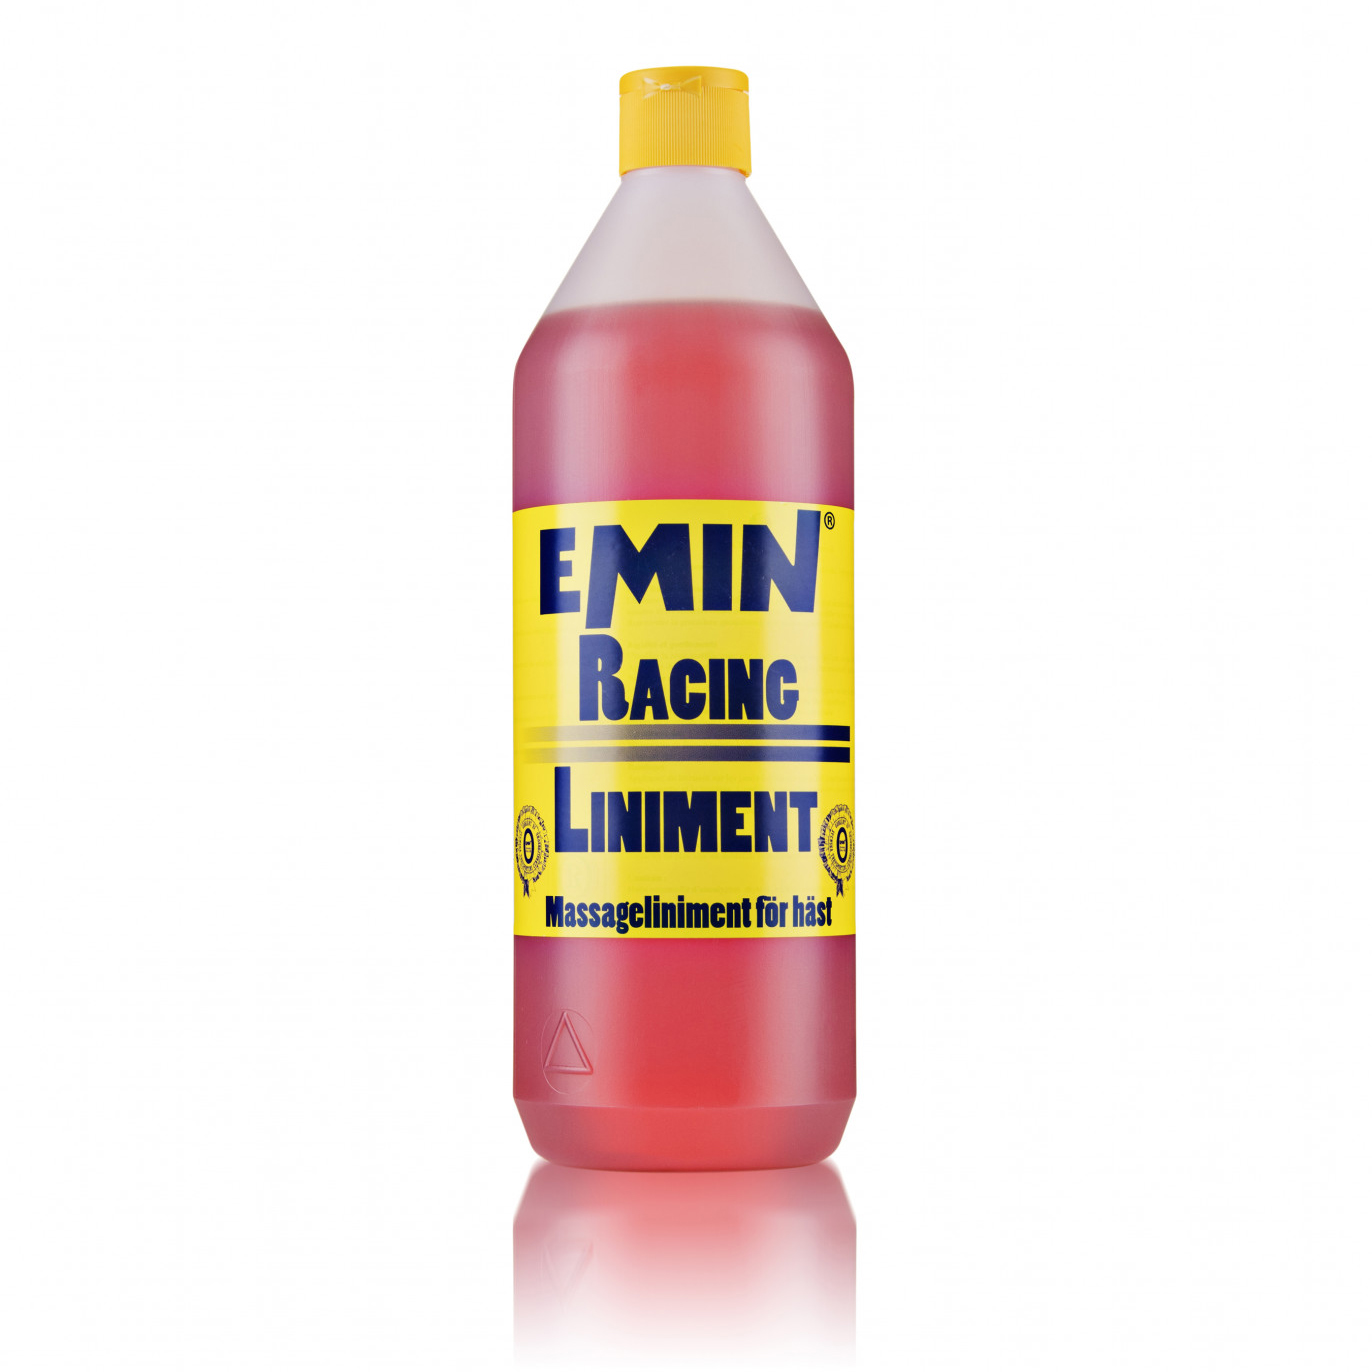 Racing liniment